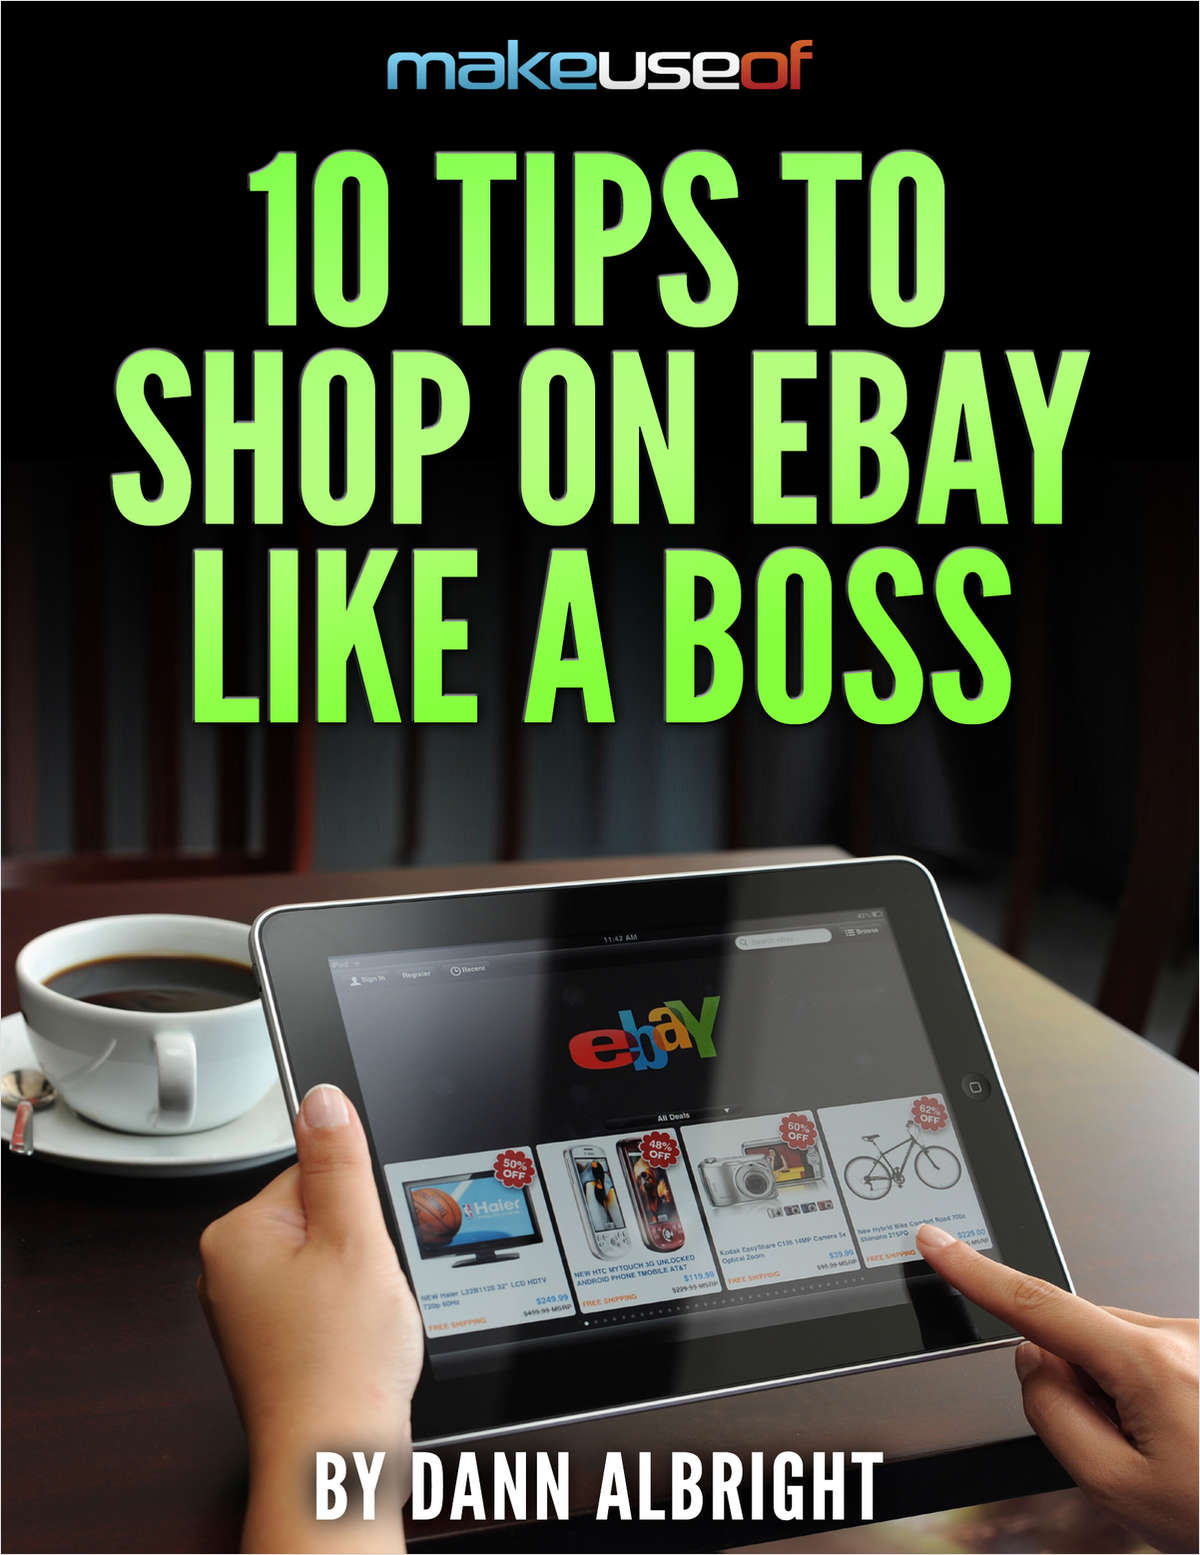 10 Tips to Shop on eBay Like a Boss